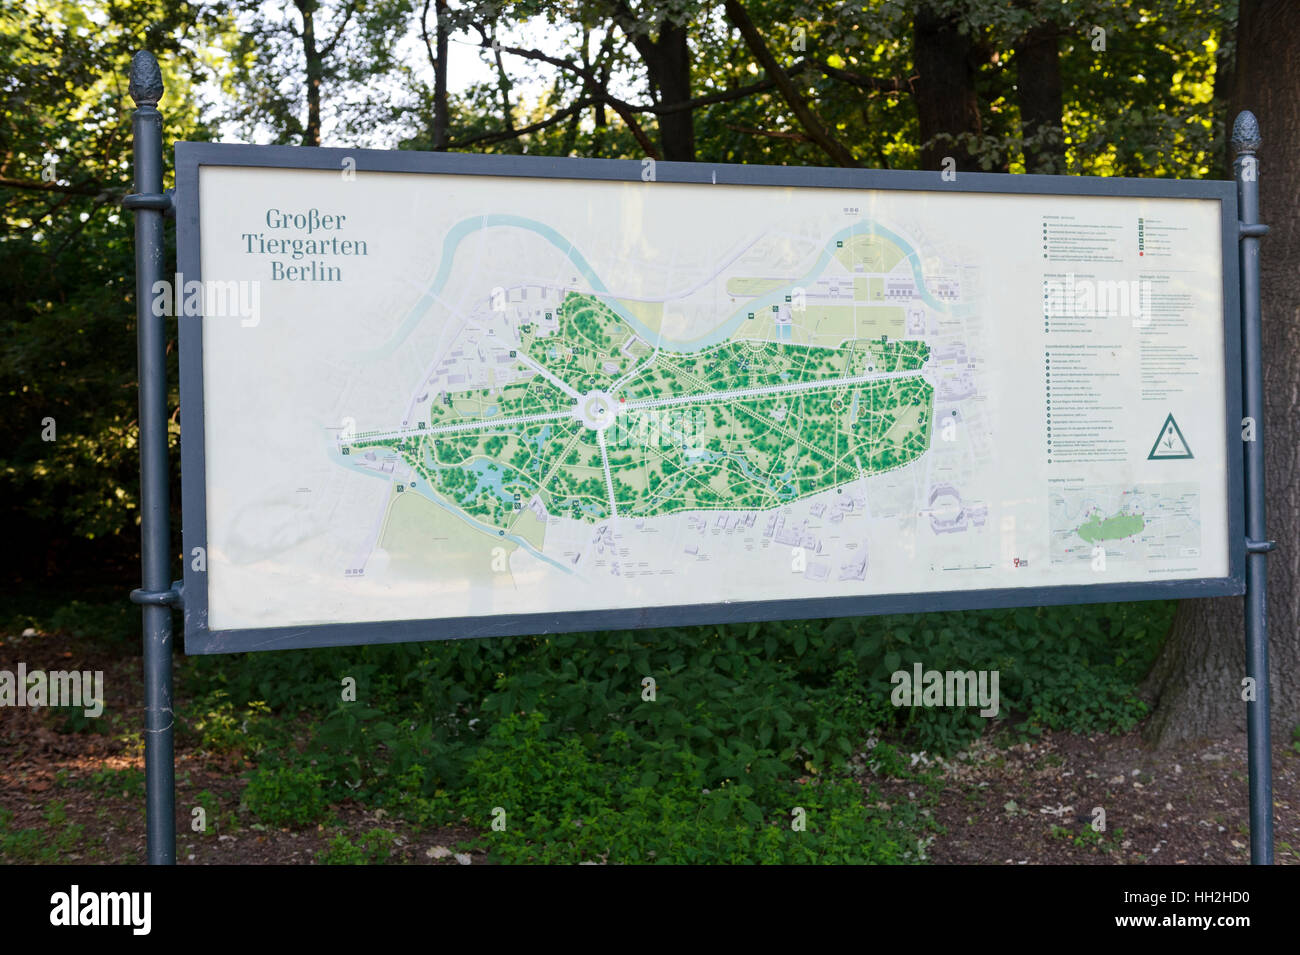 A Map of the Tiergarten Park in Berlin, Germany. Stock Photo